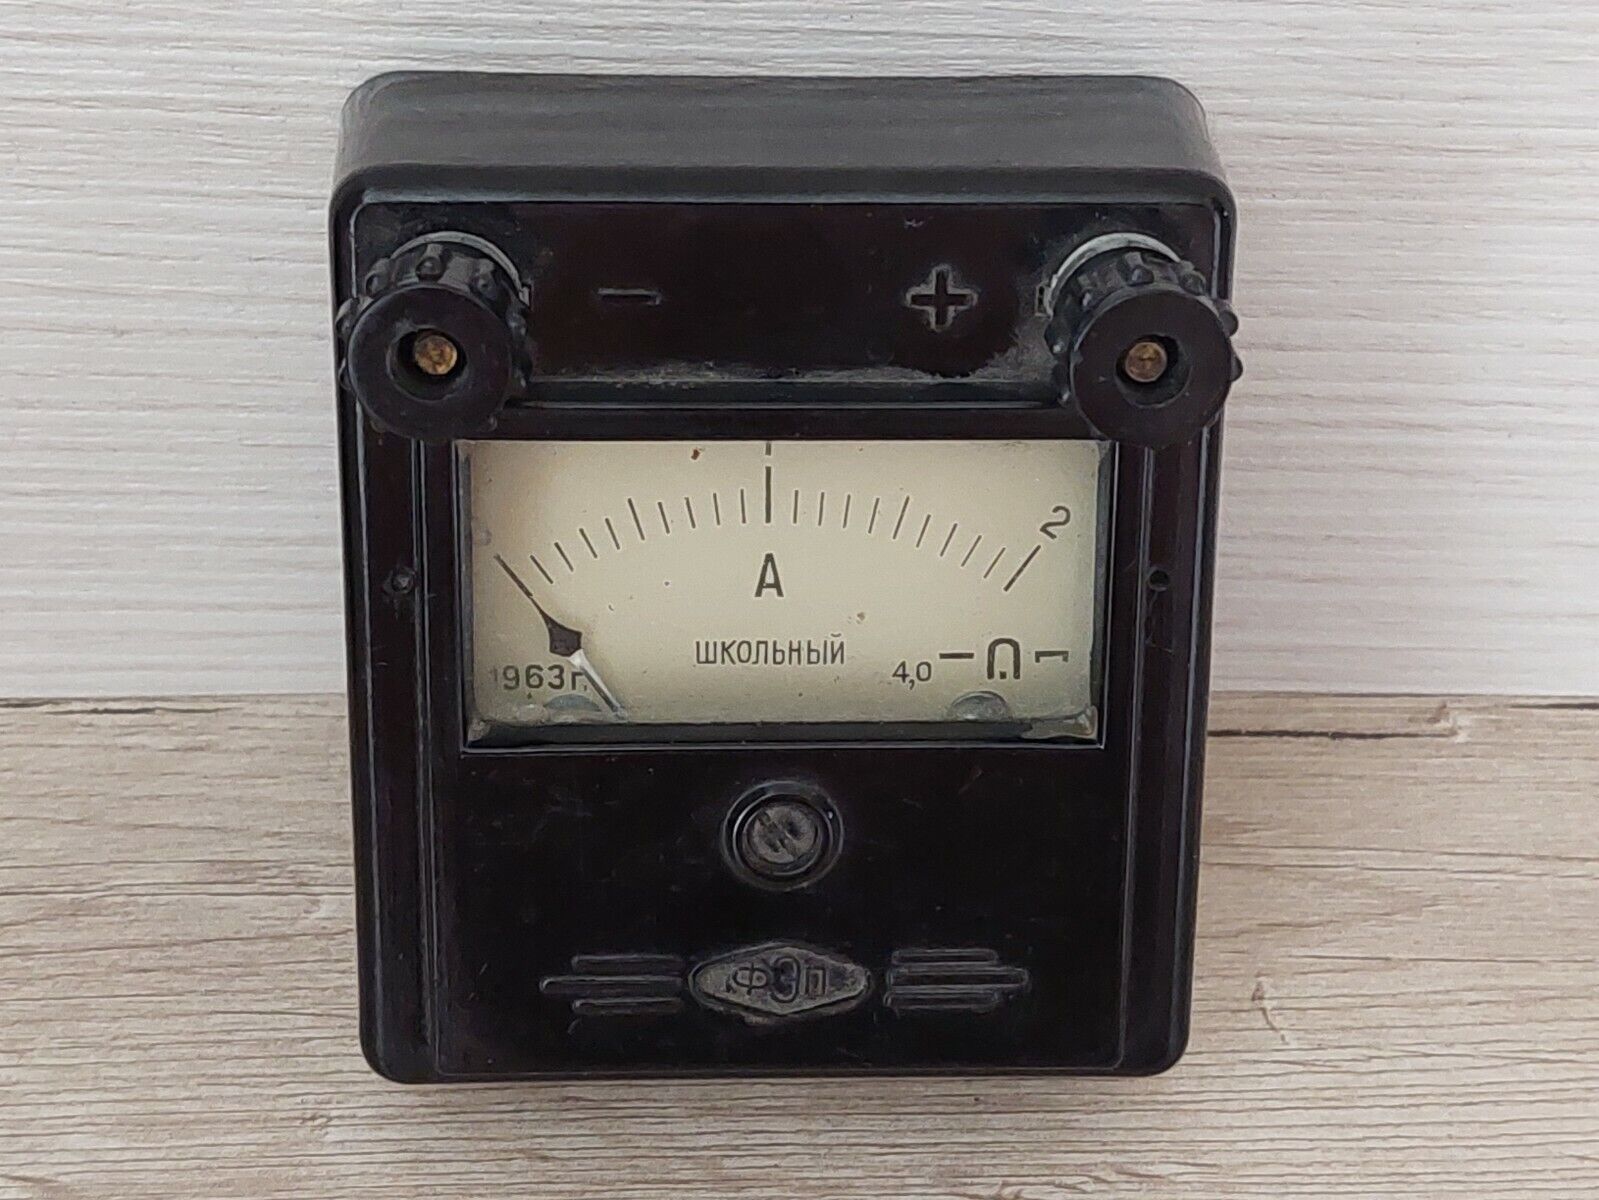 Soviet Vintage Ammeter 1963 . USSR Original Bakelite body